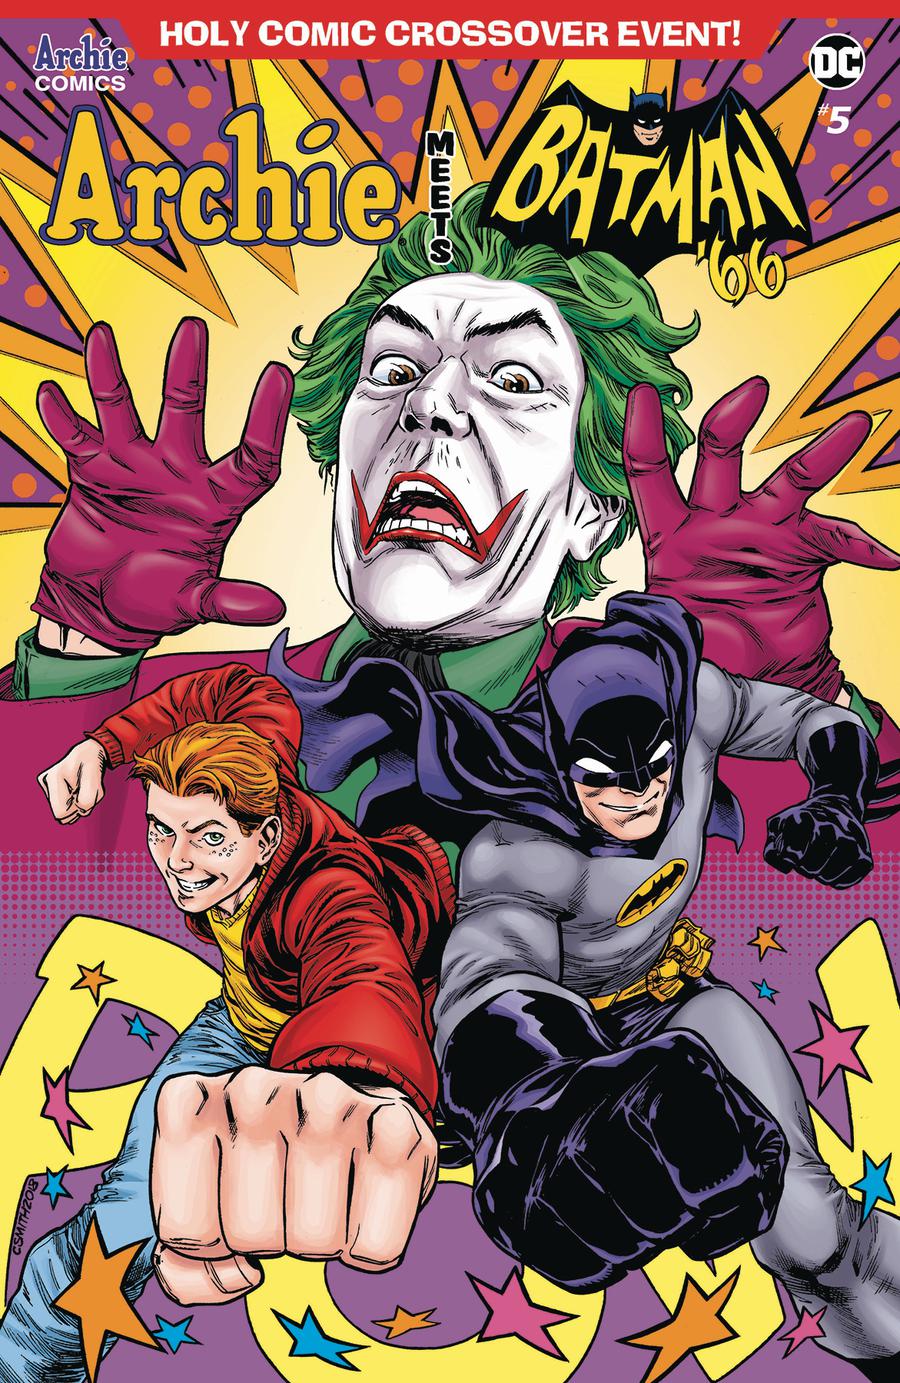 Archie Meets Batman 66 #5 Cover F Variant Cory Smith & Rosario Tito Pena Cover